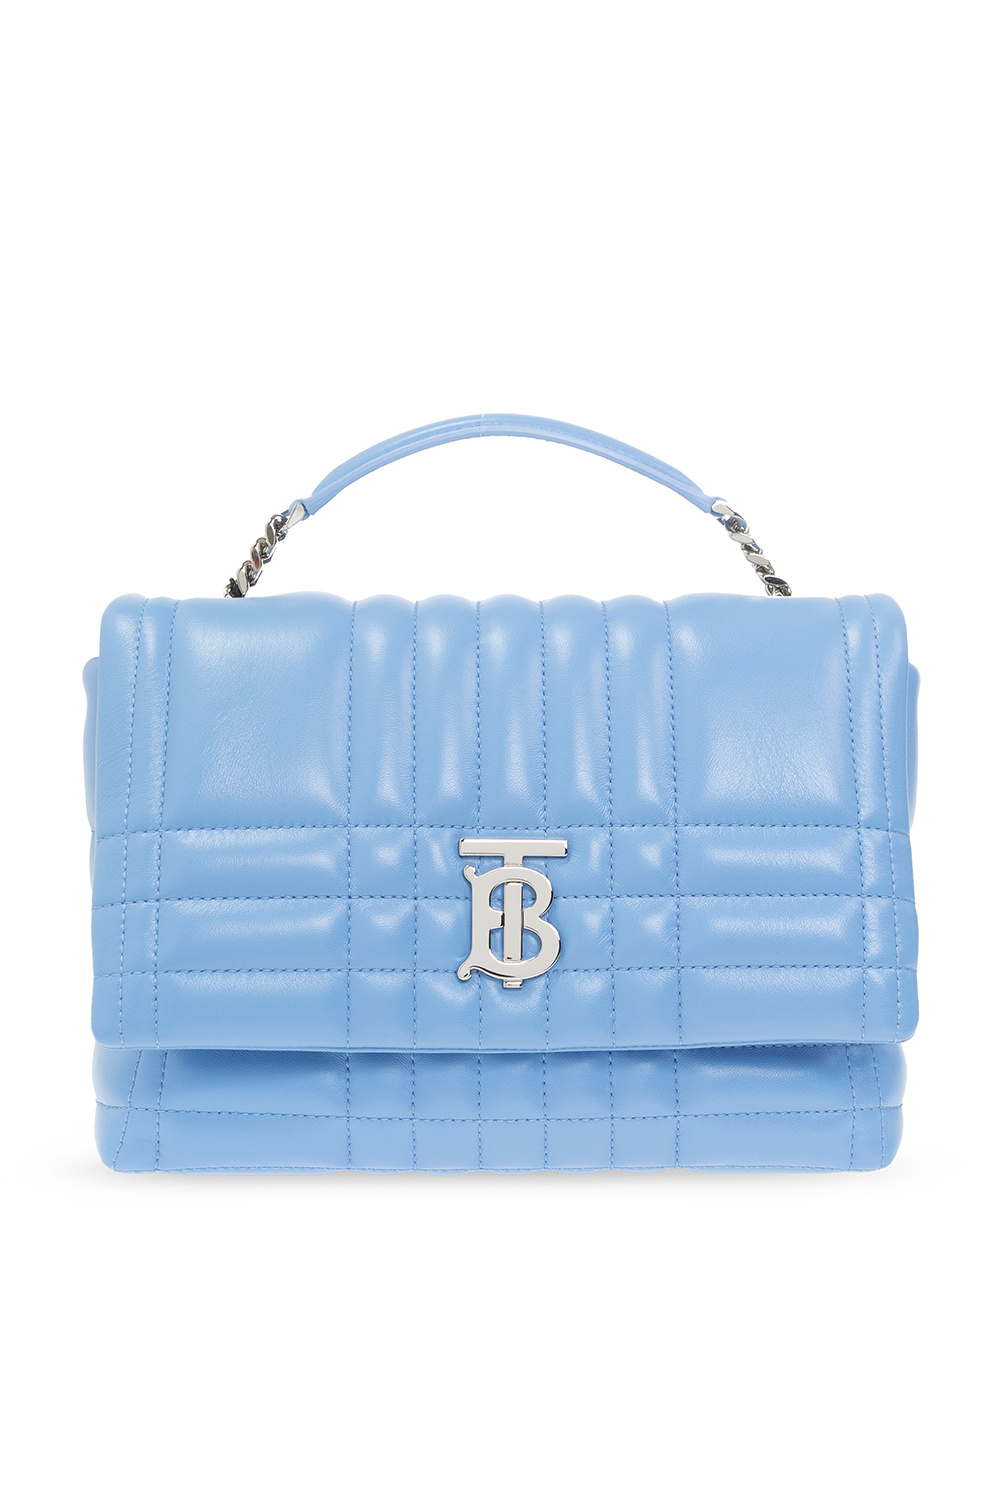 Burberry ‘Lola Small’ shoulder bag | Women's Bags | Vitkac